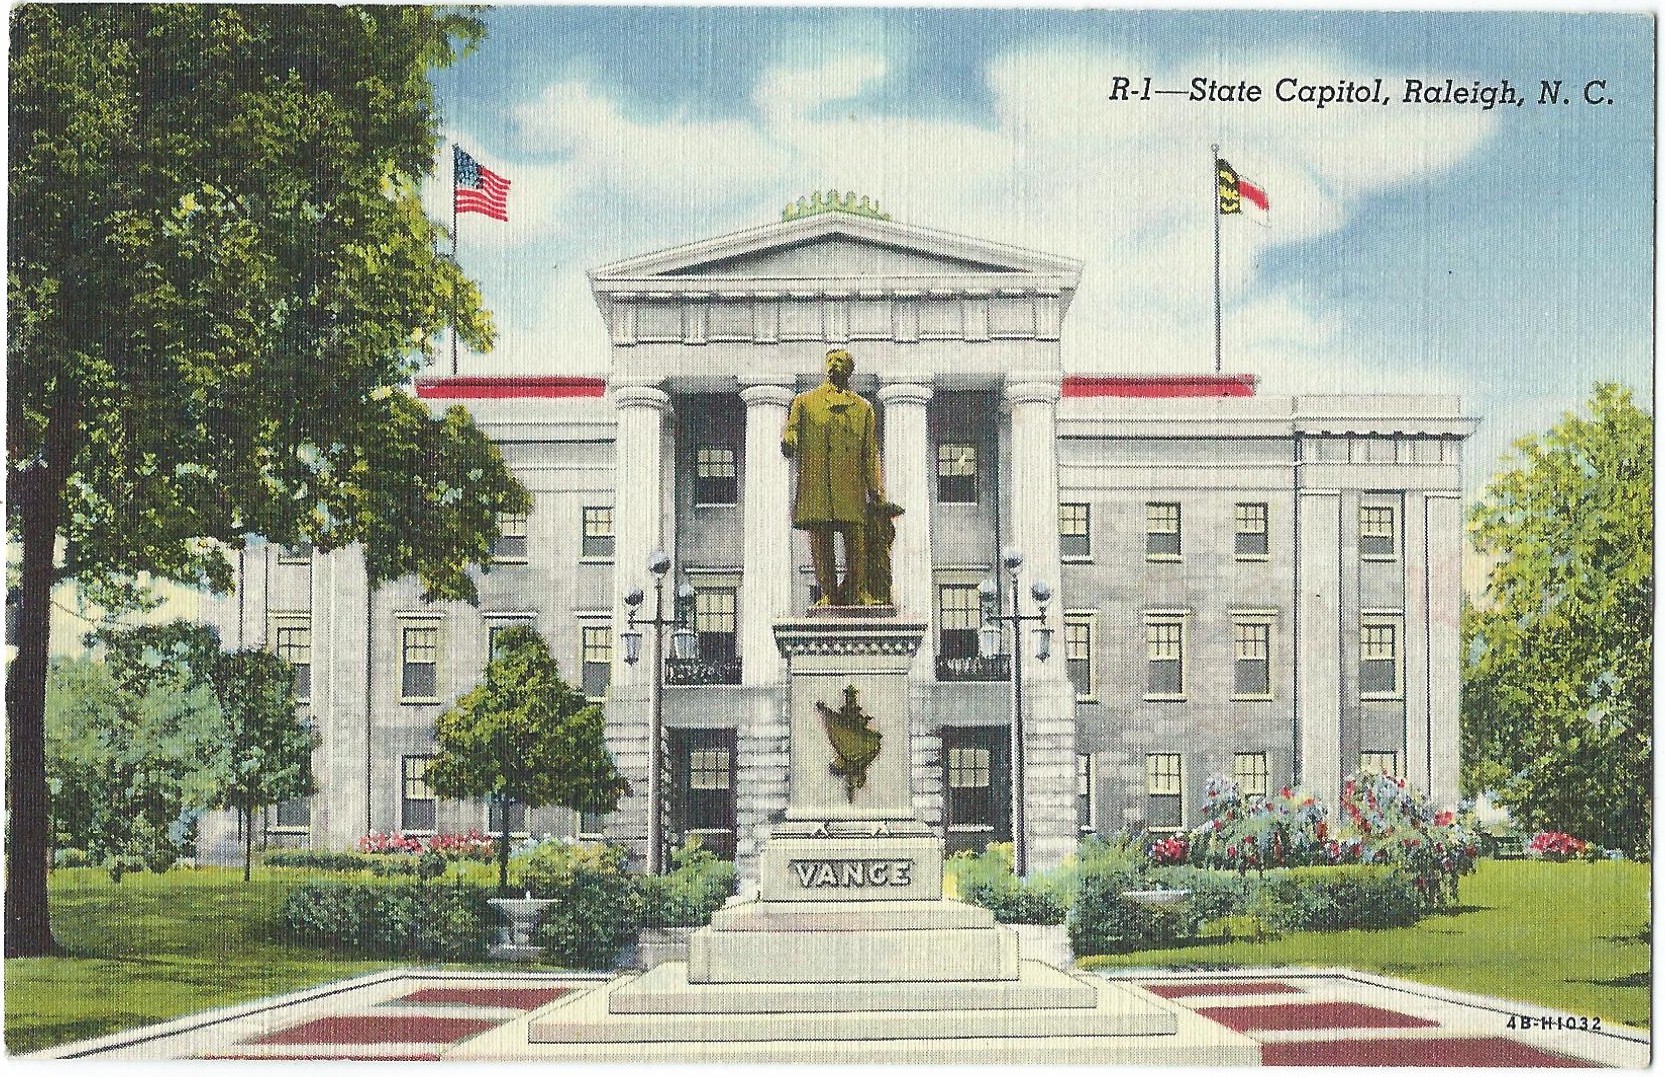 State Capitol Raleigh N.C. Postcard 4B-H1032 (NC)